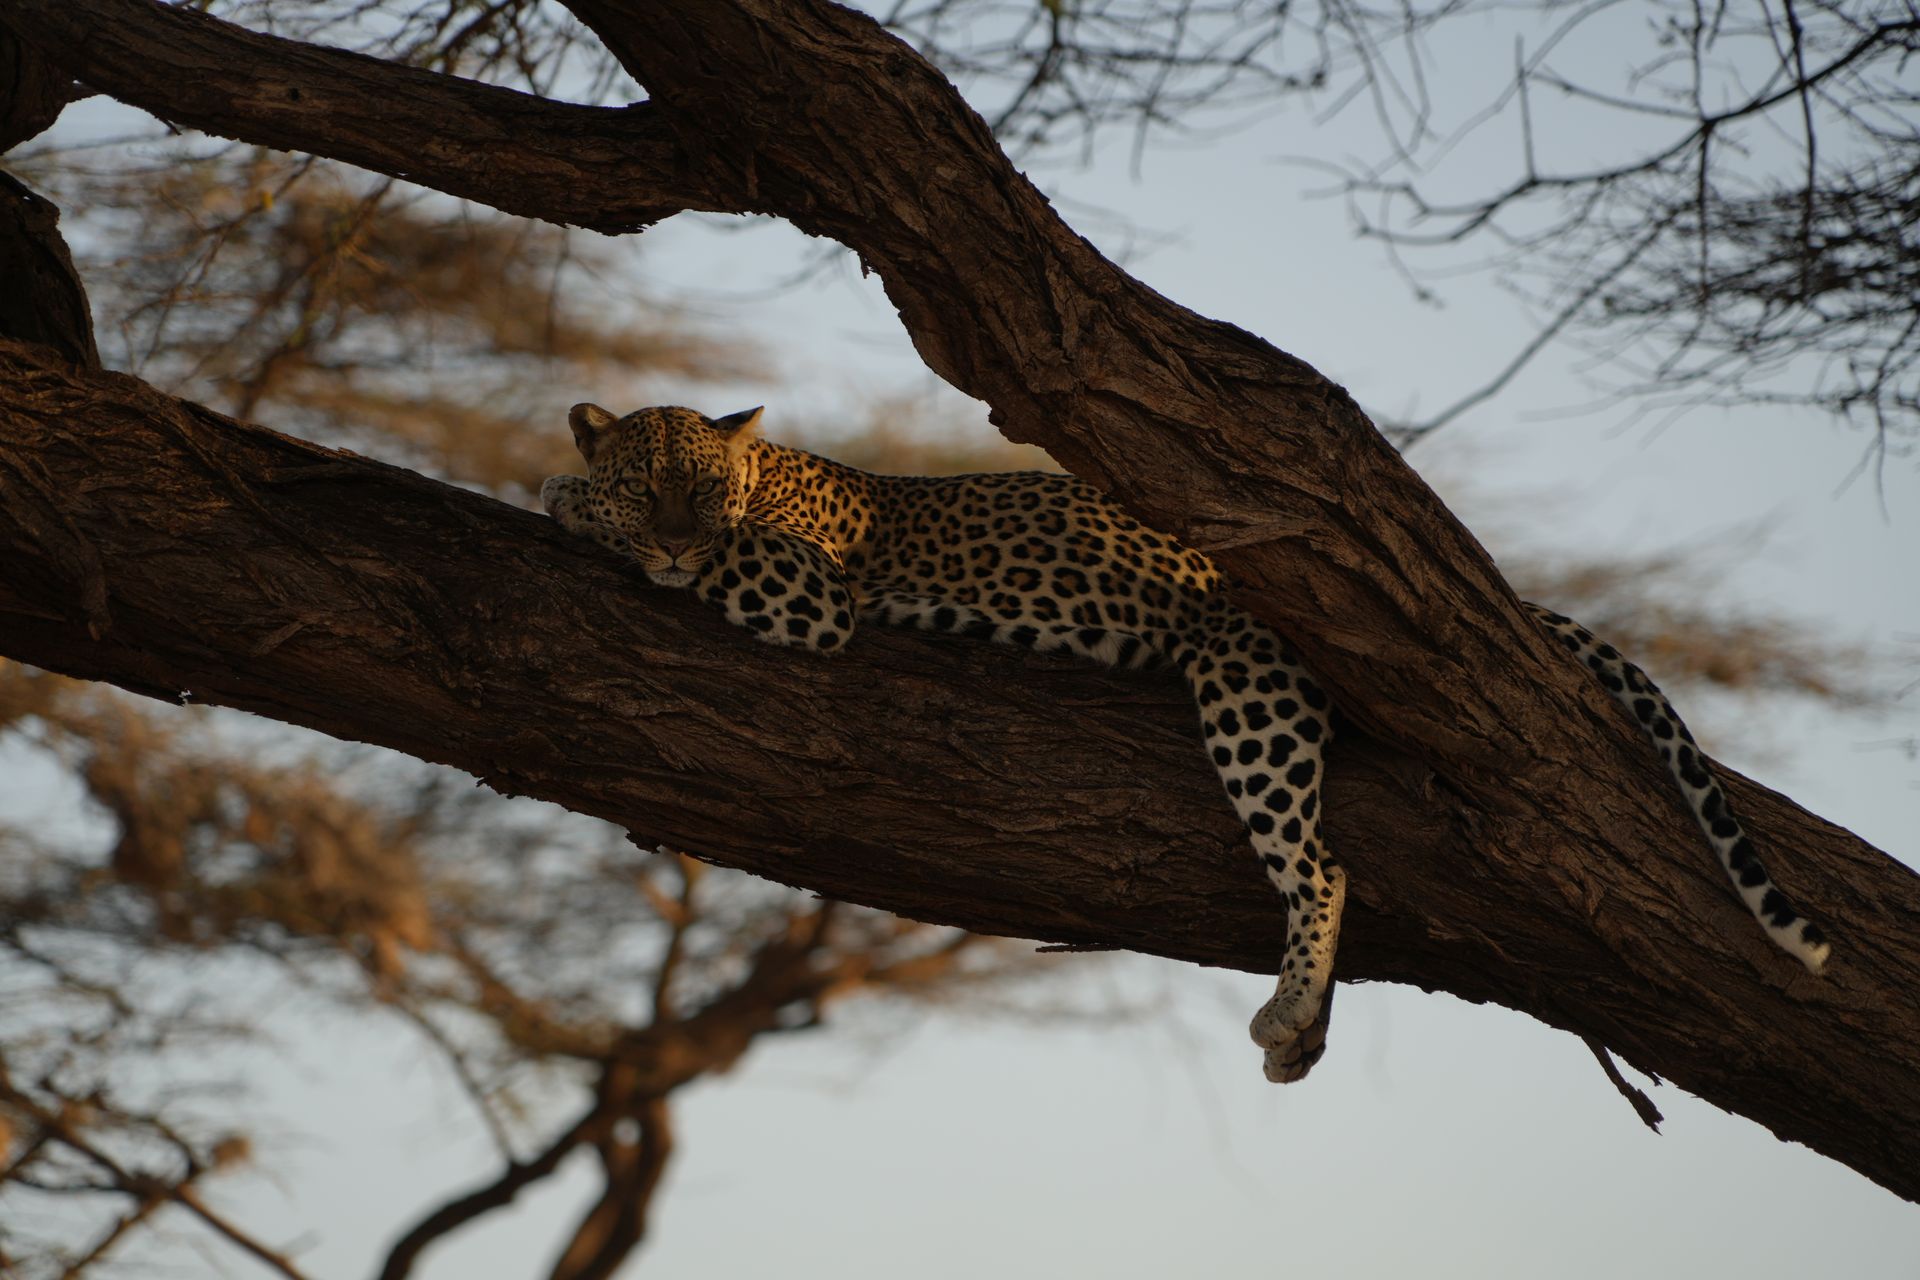 A Leopard resting after devouring a kill in Samburu.